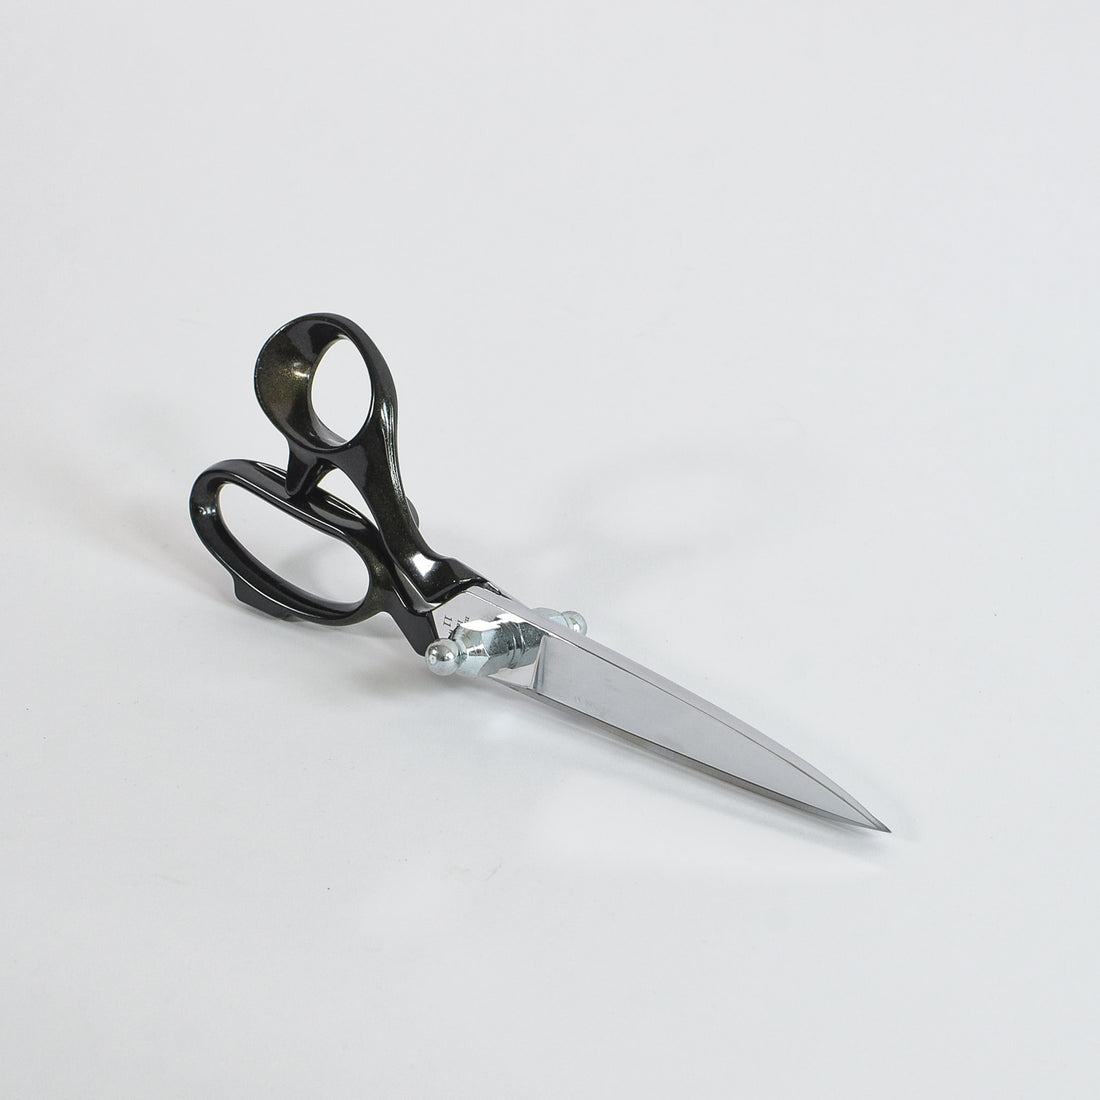 Hand Scissors  Tailor's Scissors - Scissors Safety Hand Diy Paper